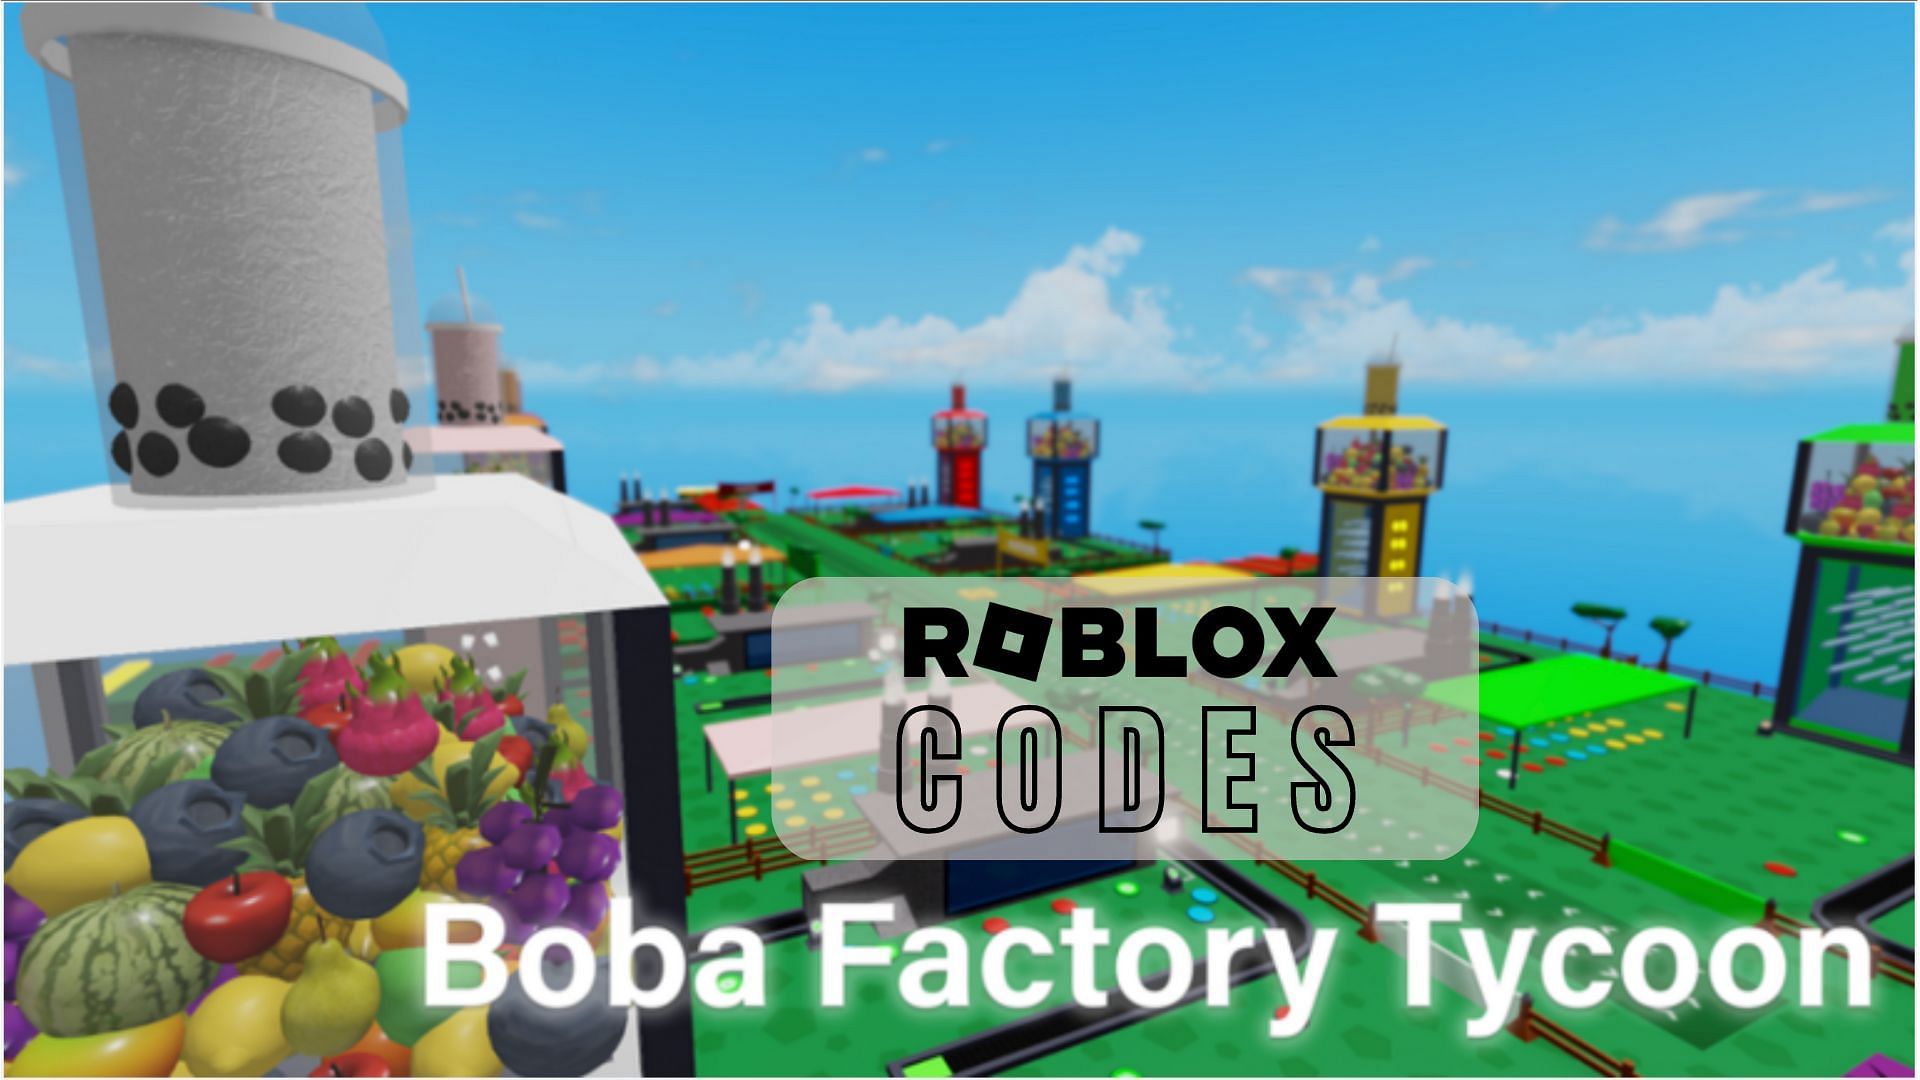 Roblox Boba Factory Tycoon codes in February 2023. (Image via Sportskeeda)